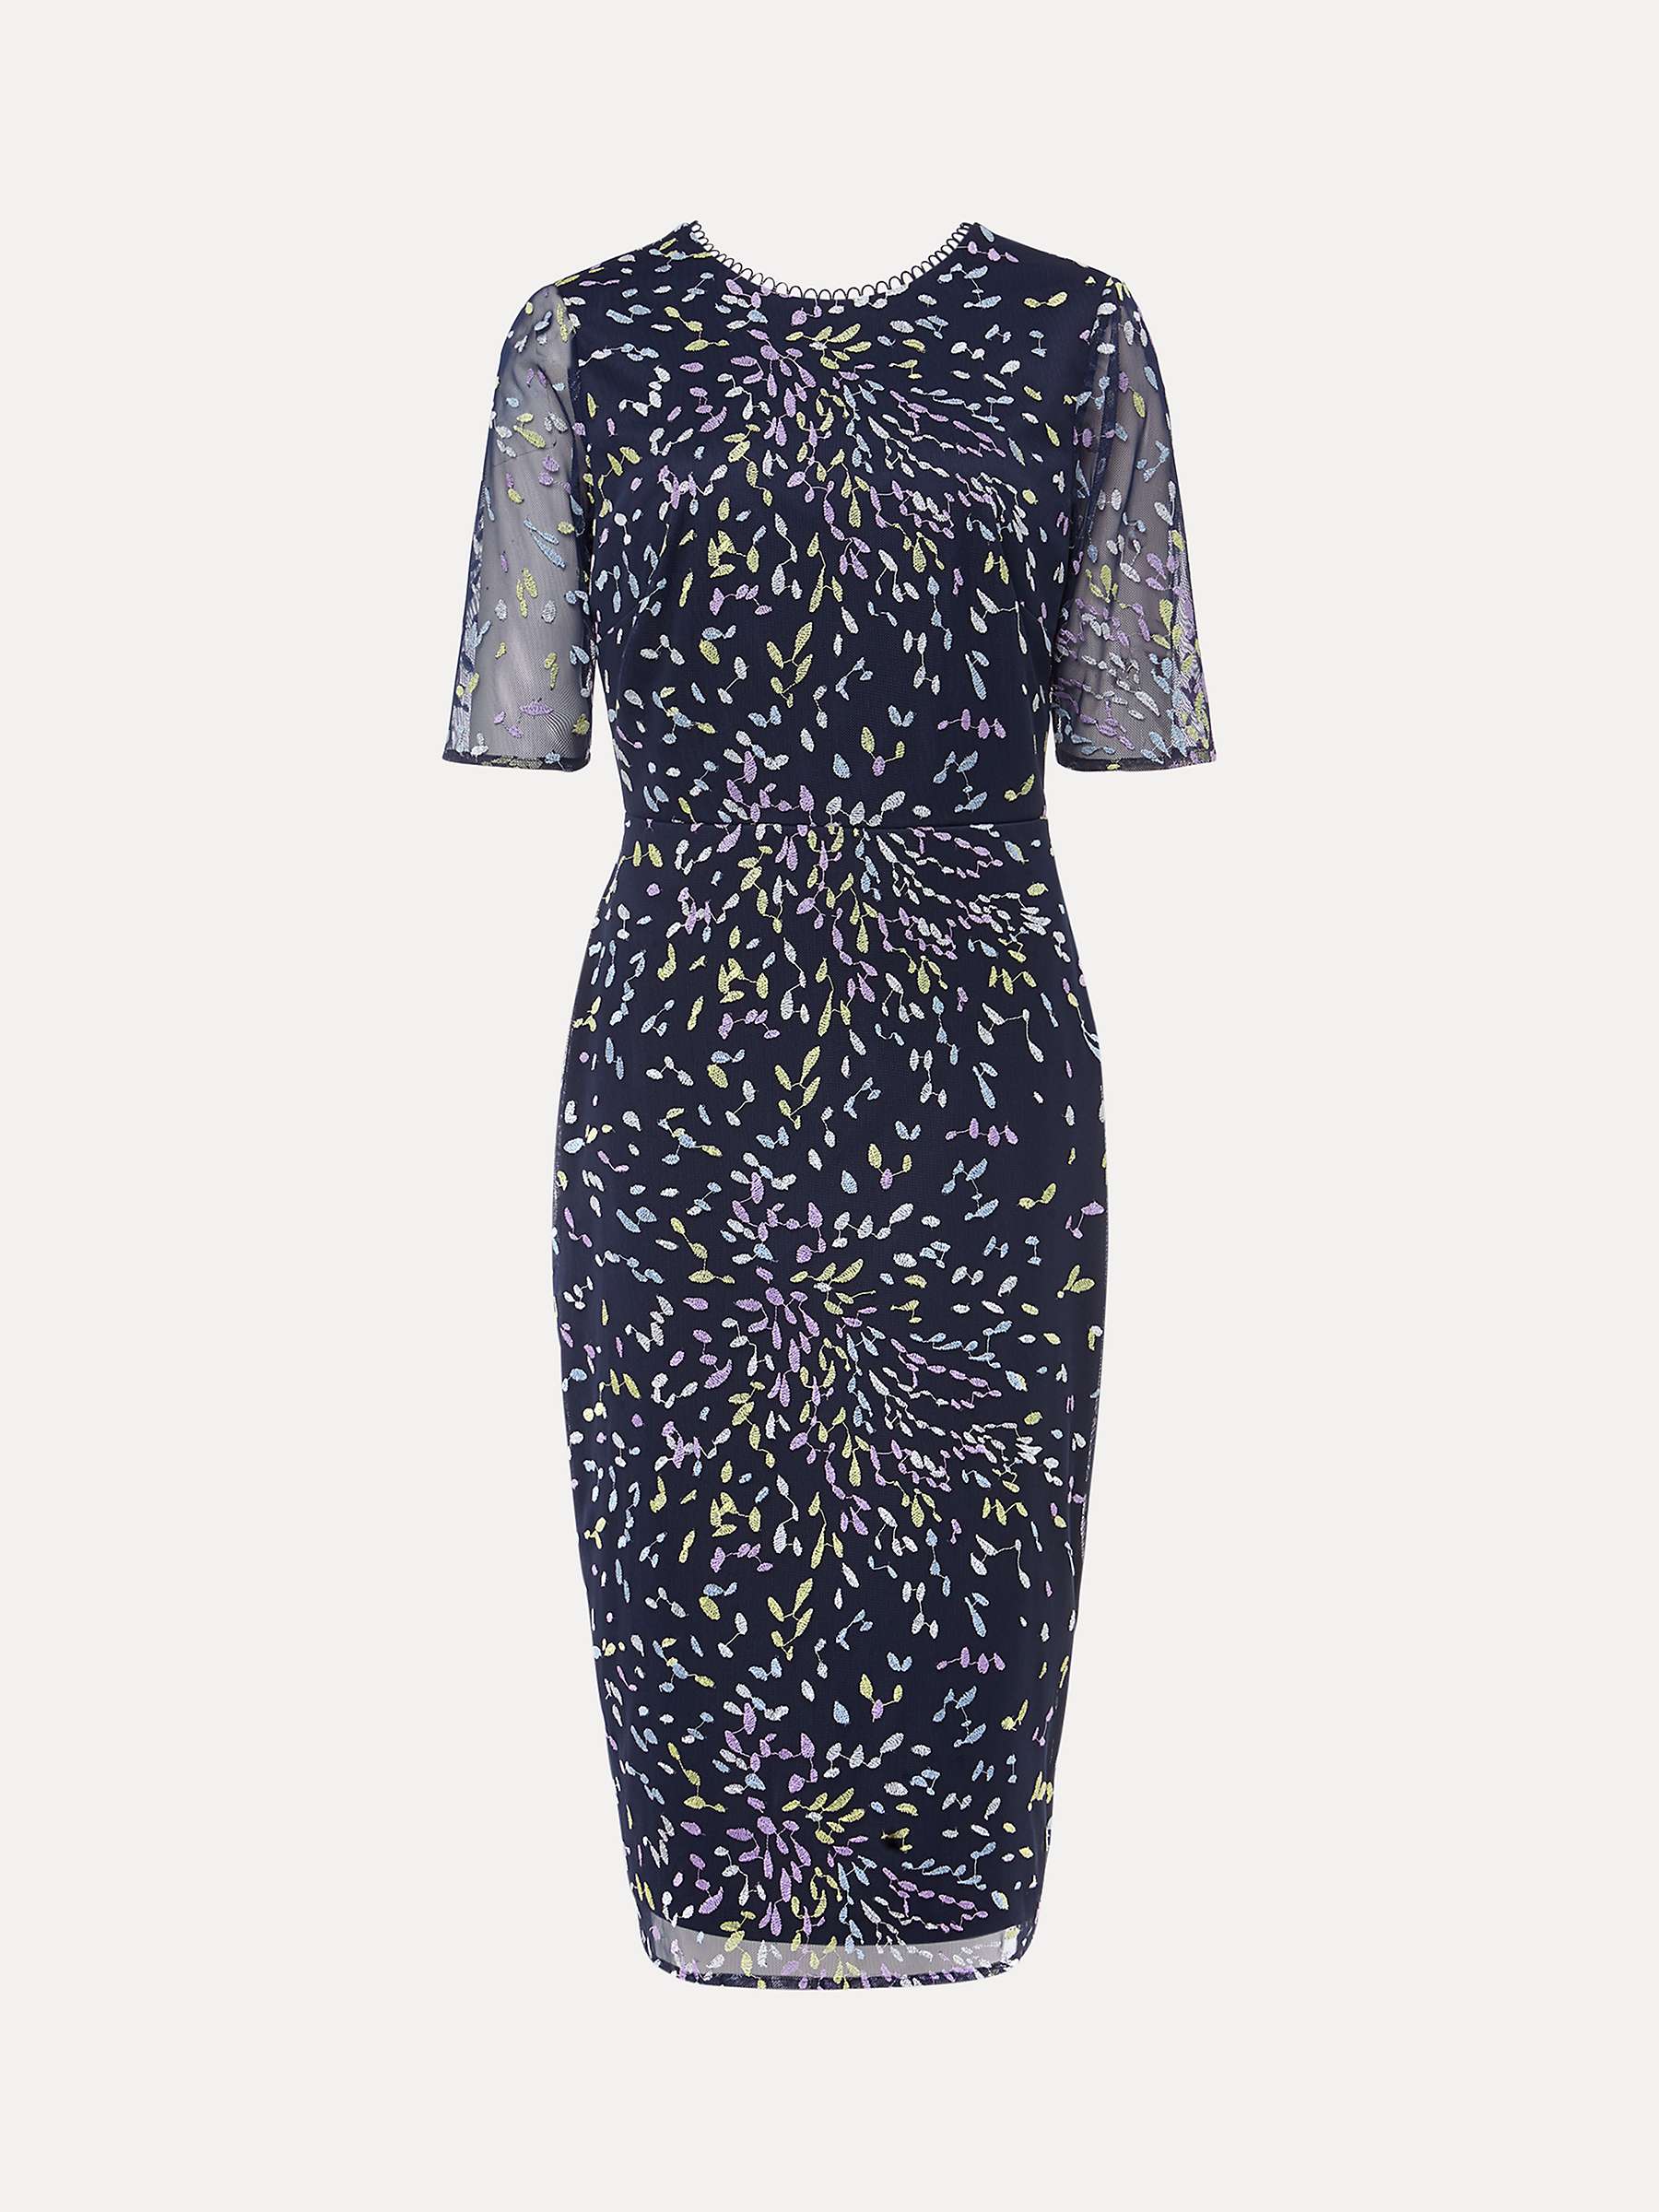 Buy Phase Eight Aileena Women's Dress, Navy/Multi Online at johnlewis.com